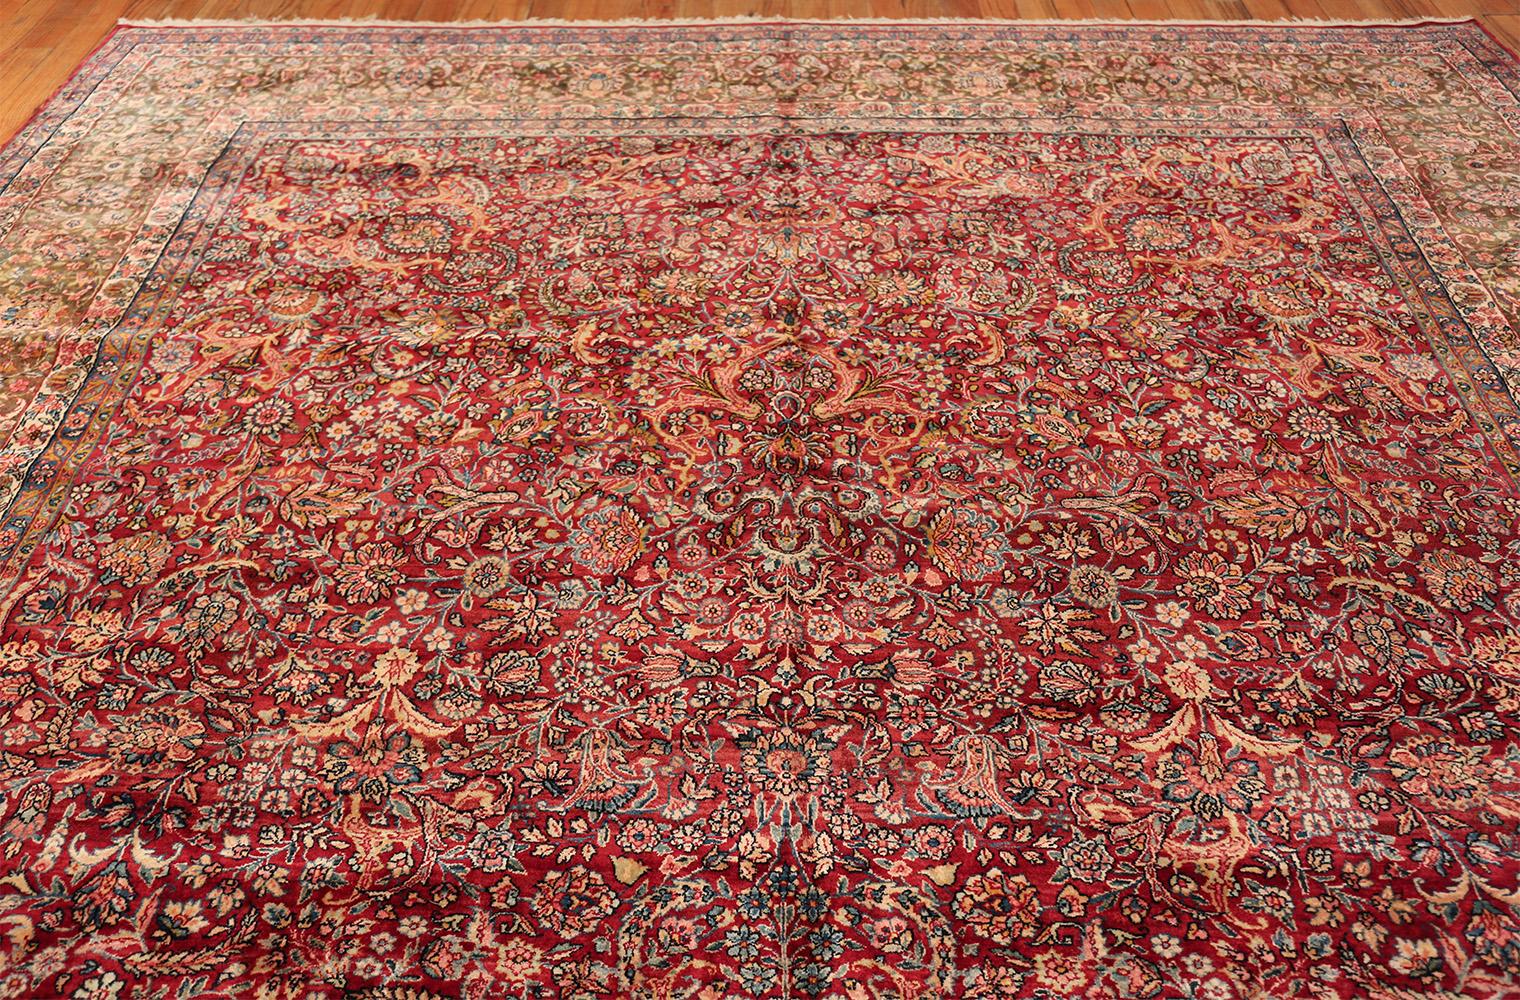 Kirman Antique Kerman Persian Rug. Size: 9 ft 9 in x 17 ft 3 in (2.97 m x 5.26 m)